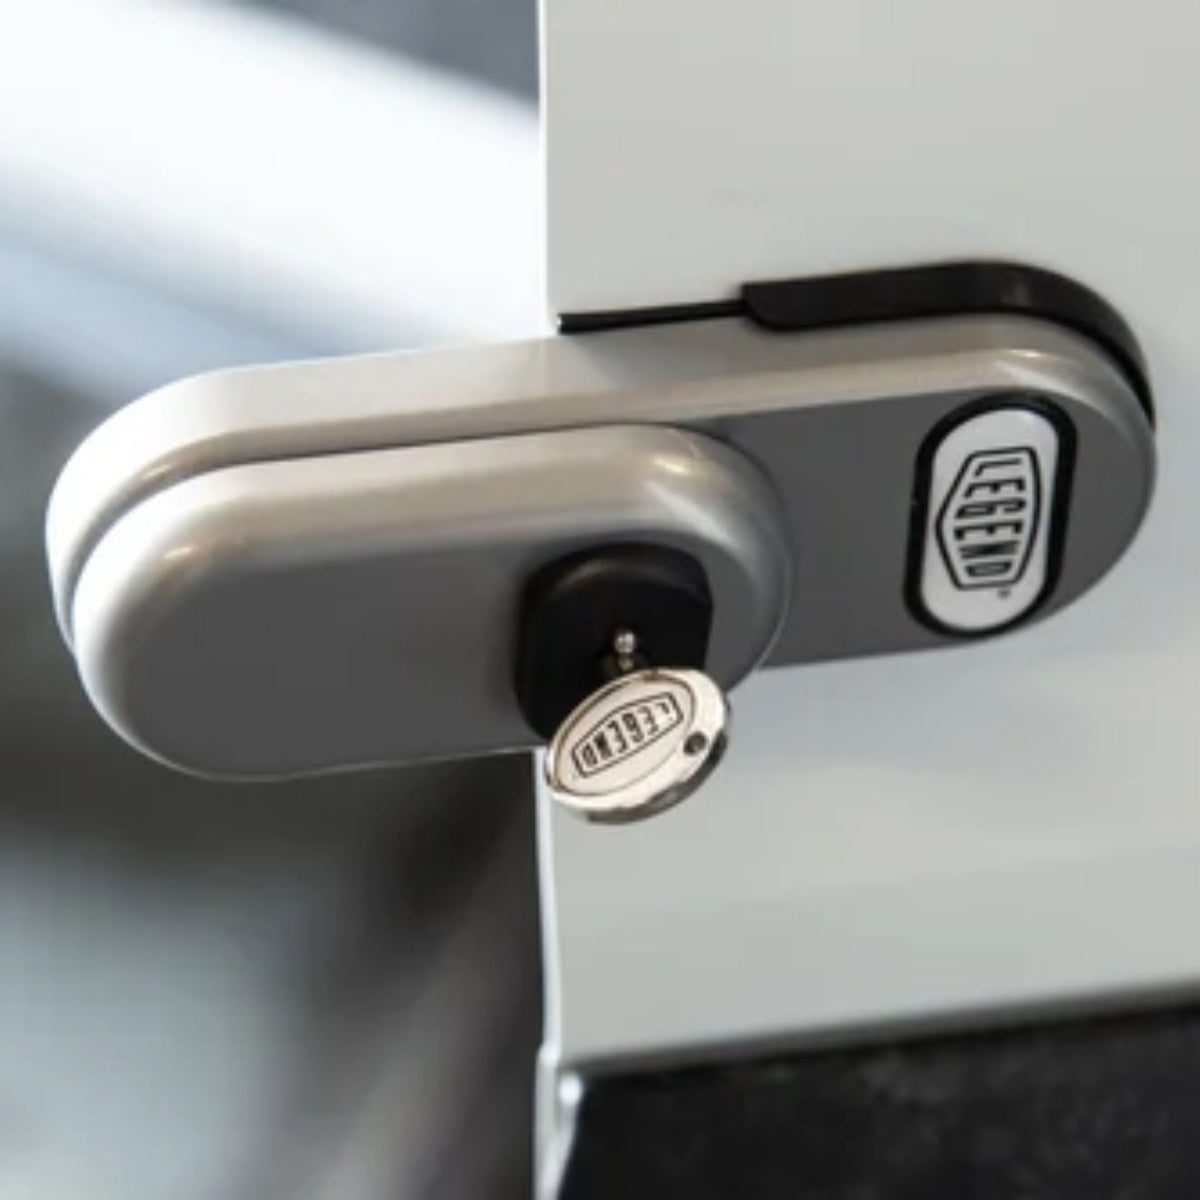 Legend Lock&#39;s SecuriLock Premium Van Door Lock Withstands Damage From Use, Weather and Tampering - The Lock Source